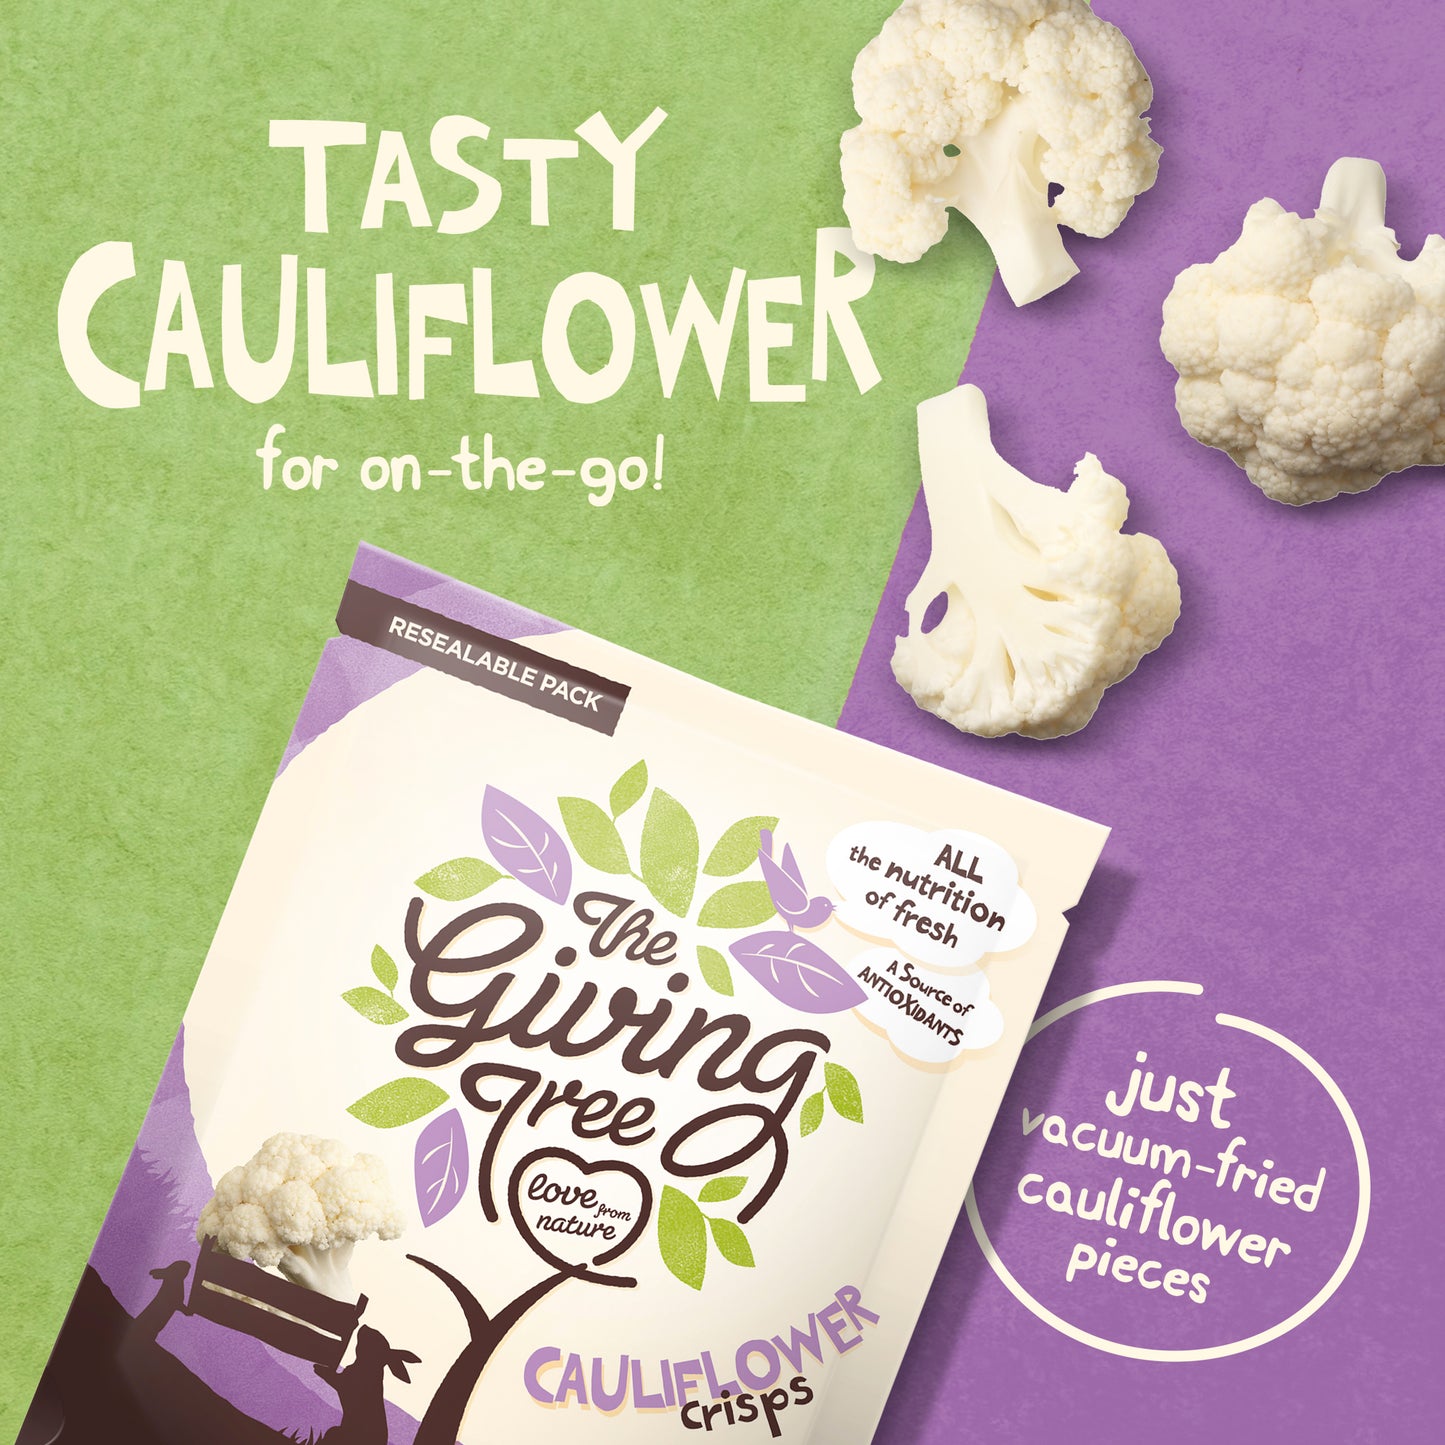 Cauliflower Crisps